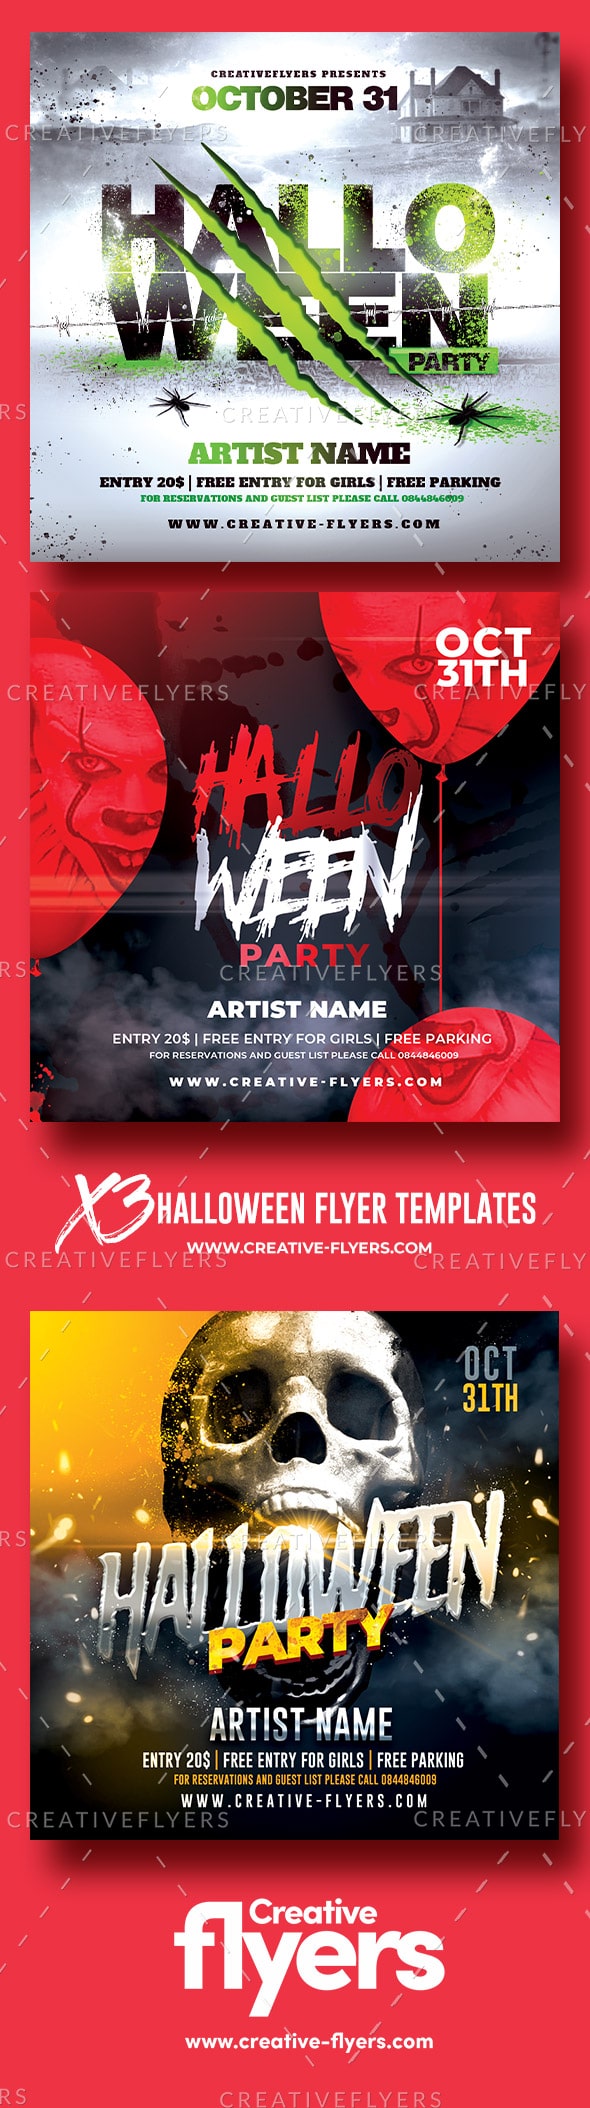 3 Halloween Flyer Templates